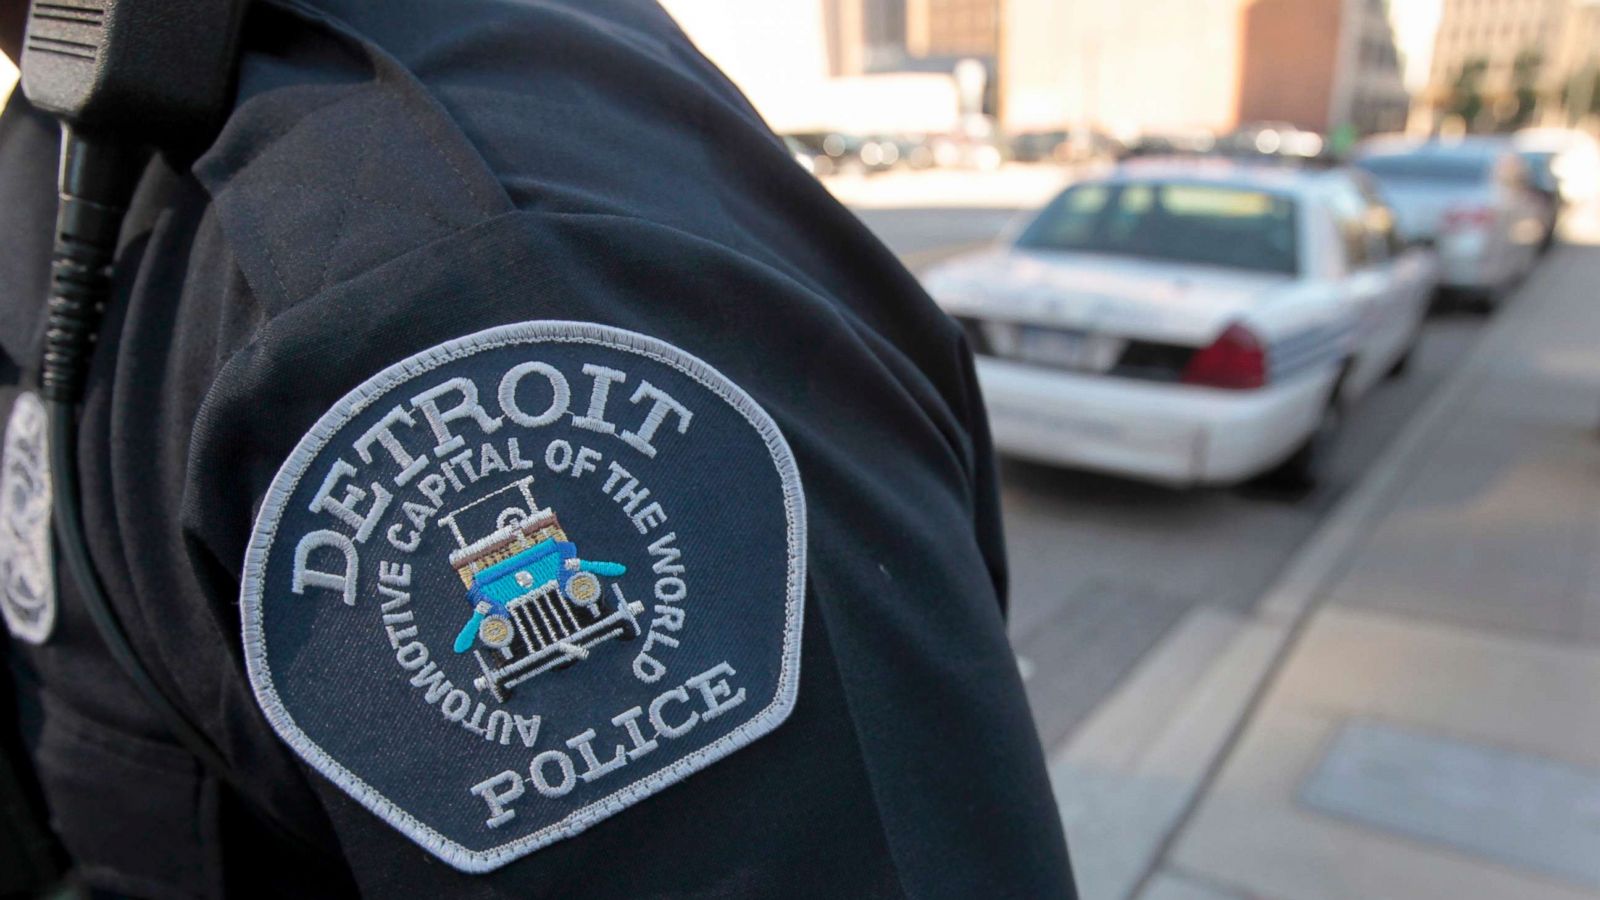 Detroit police officer under investigation after alleged racist